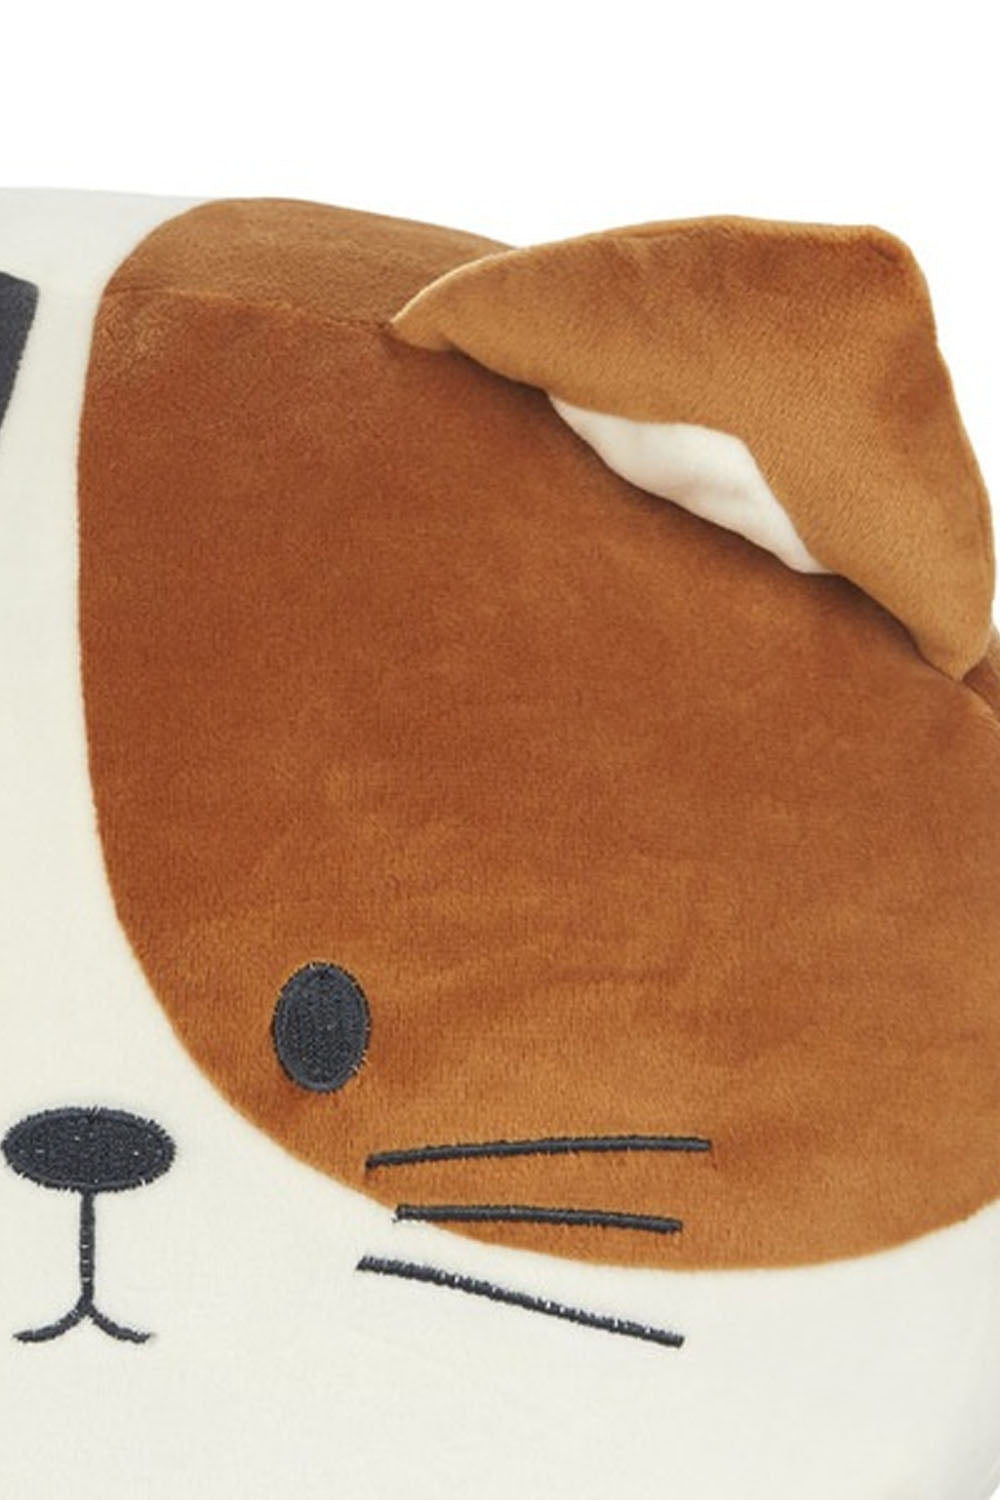 Kitty Calico Polyester Cushion, Multi